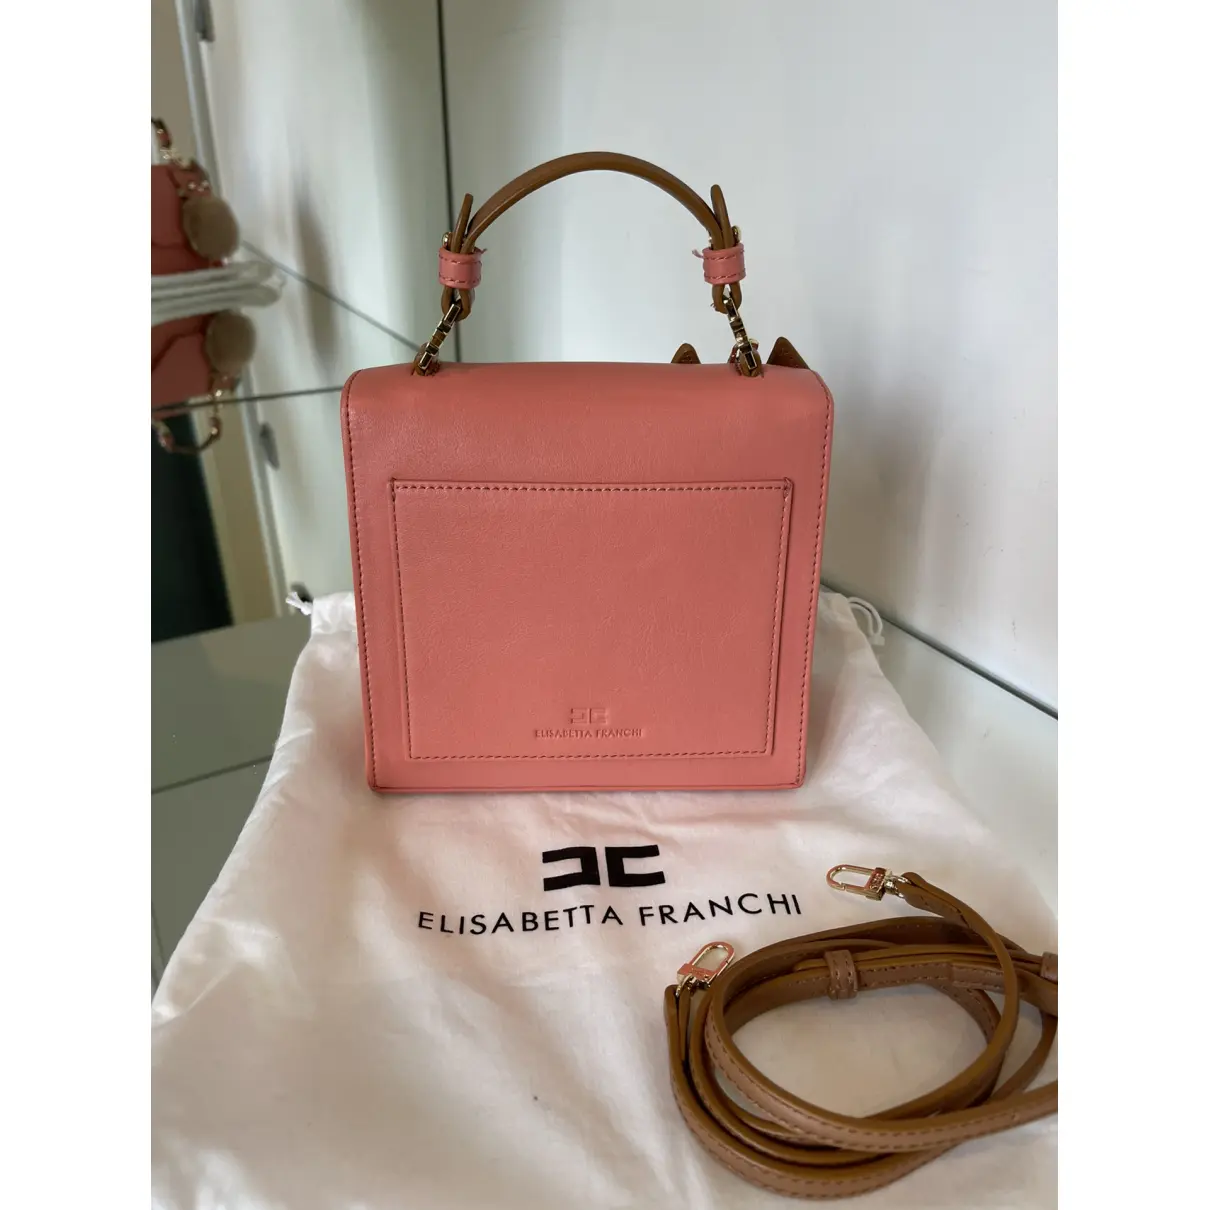 Buy Elisabetta Franchi Vegan leather handbag online